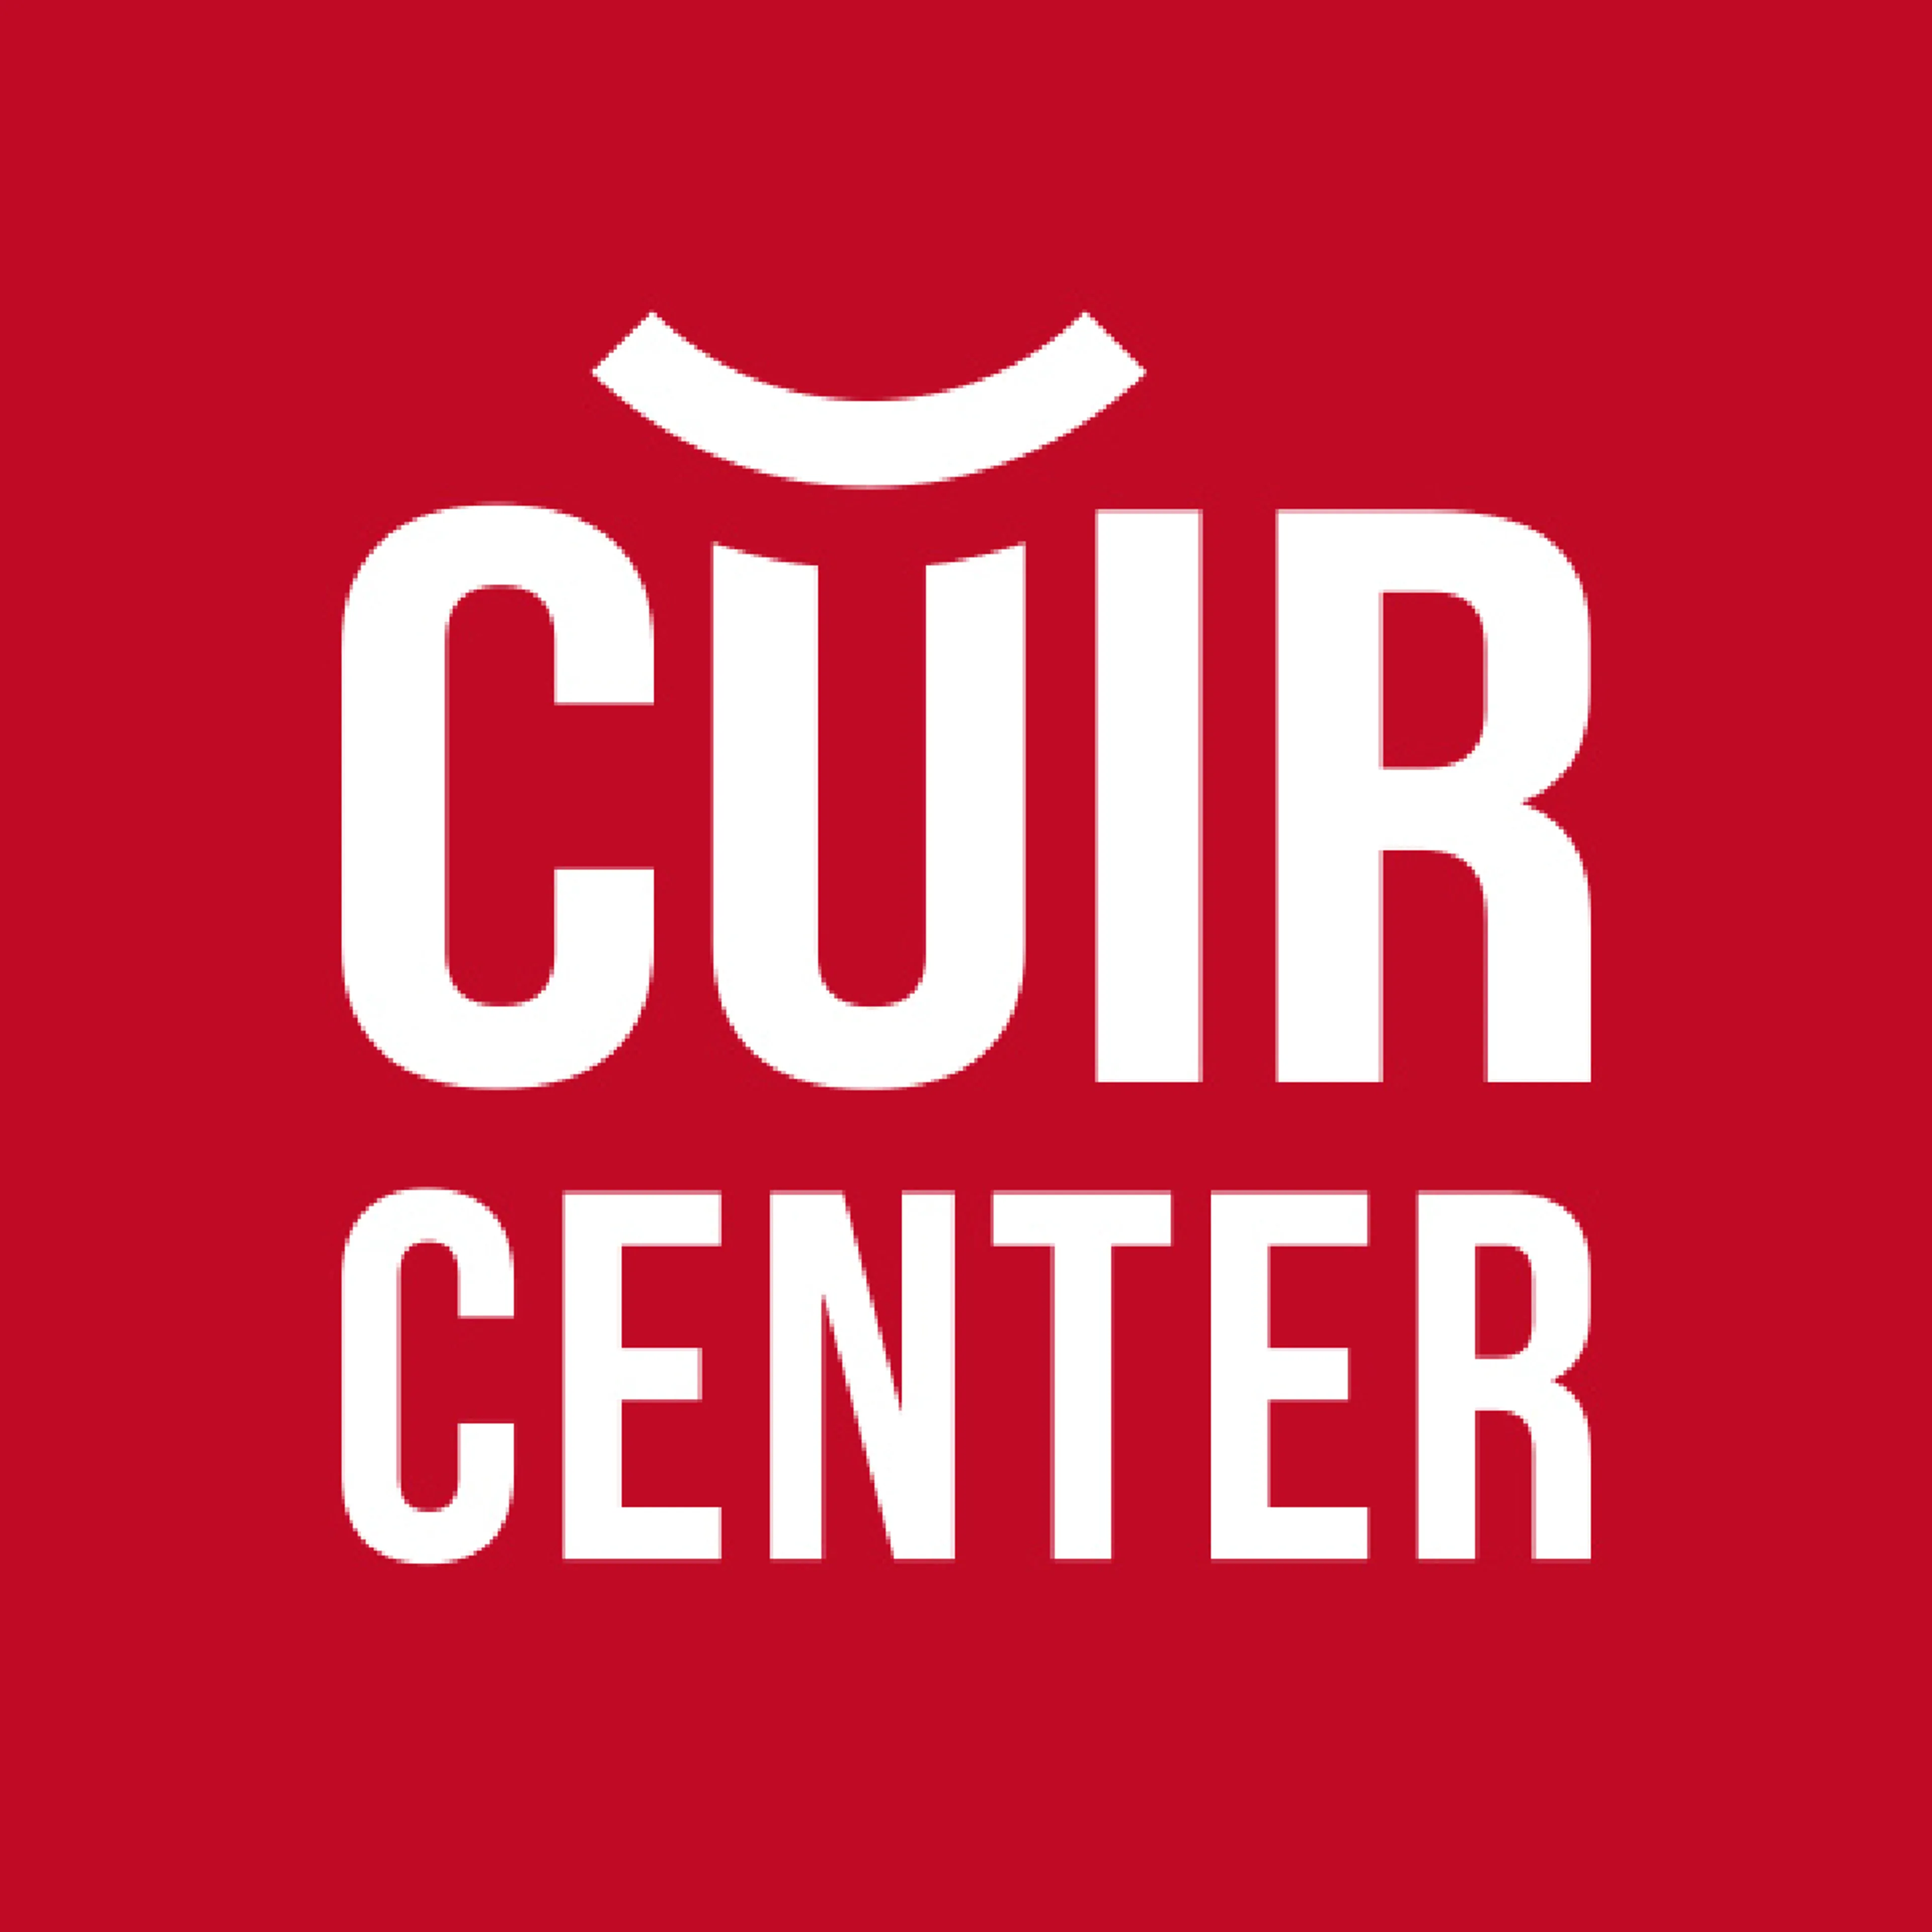 CUIR CENTER logo